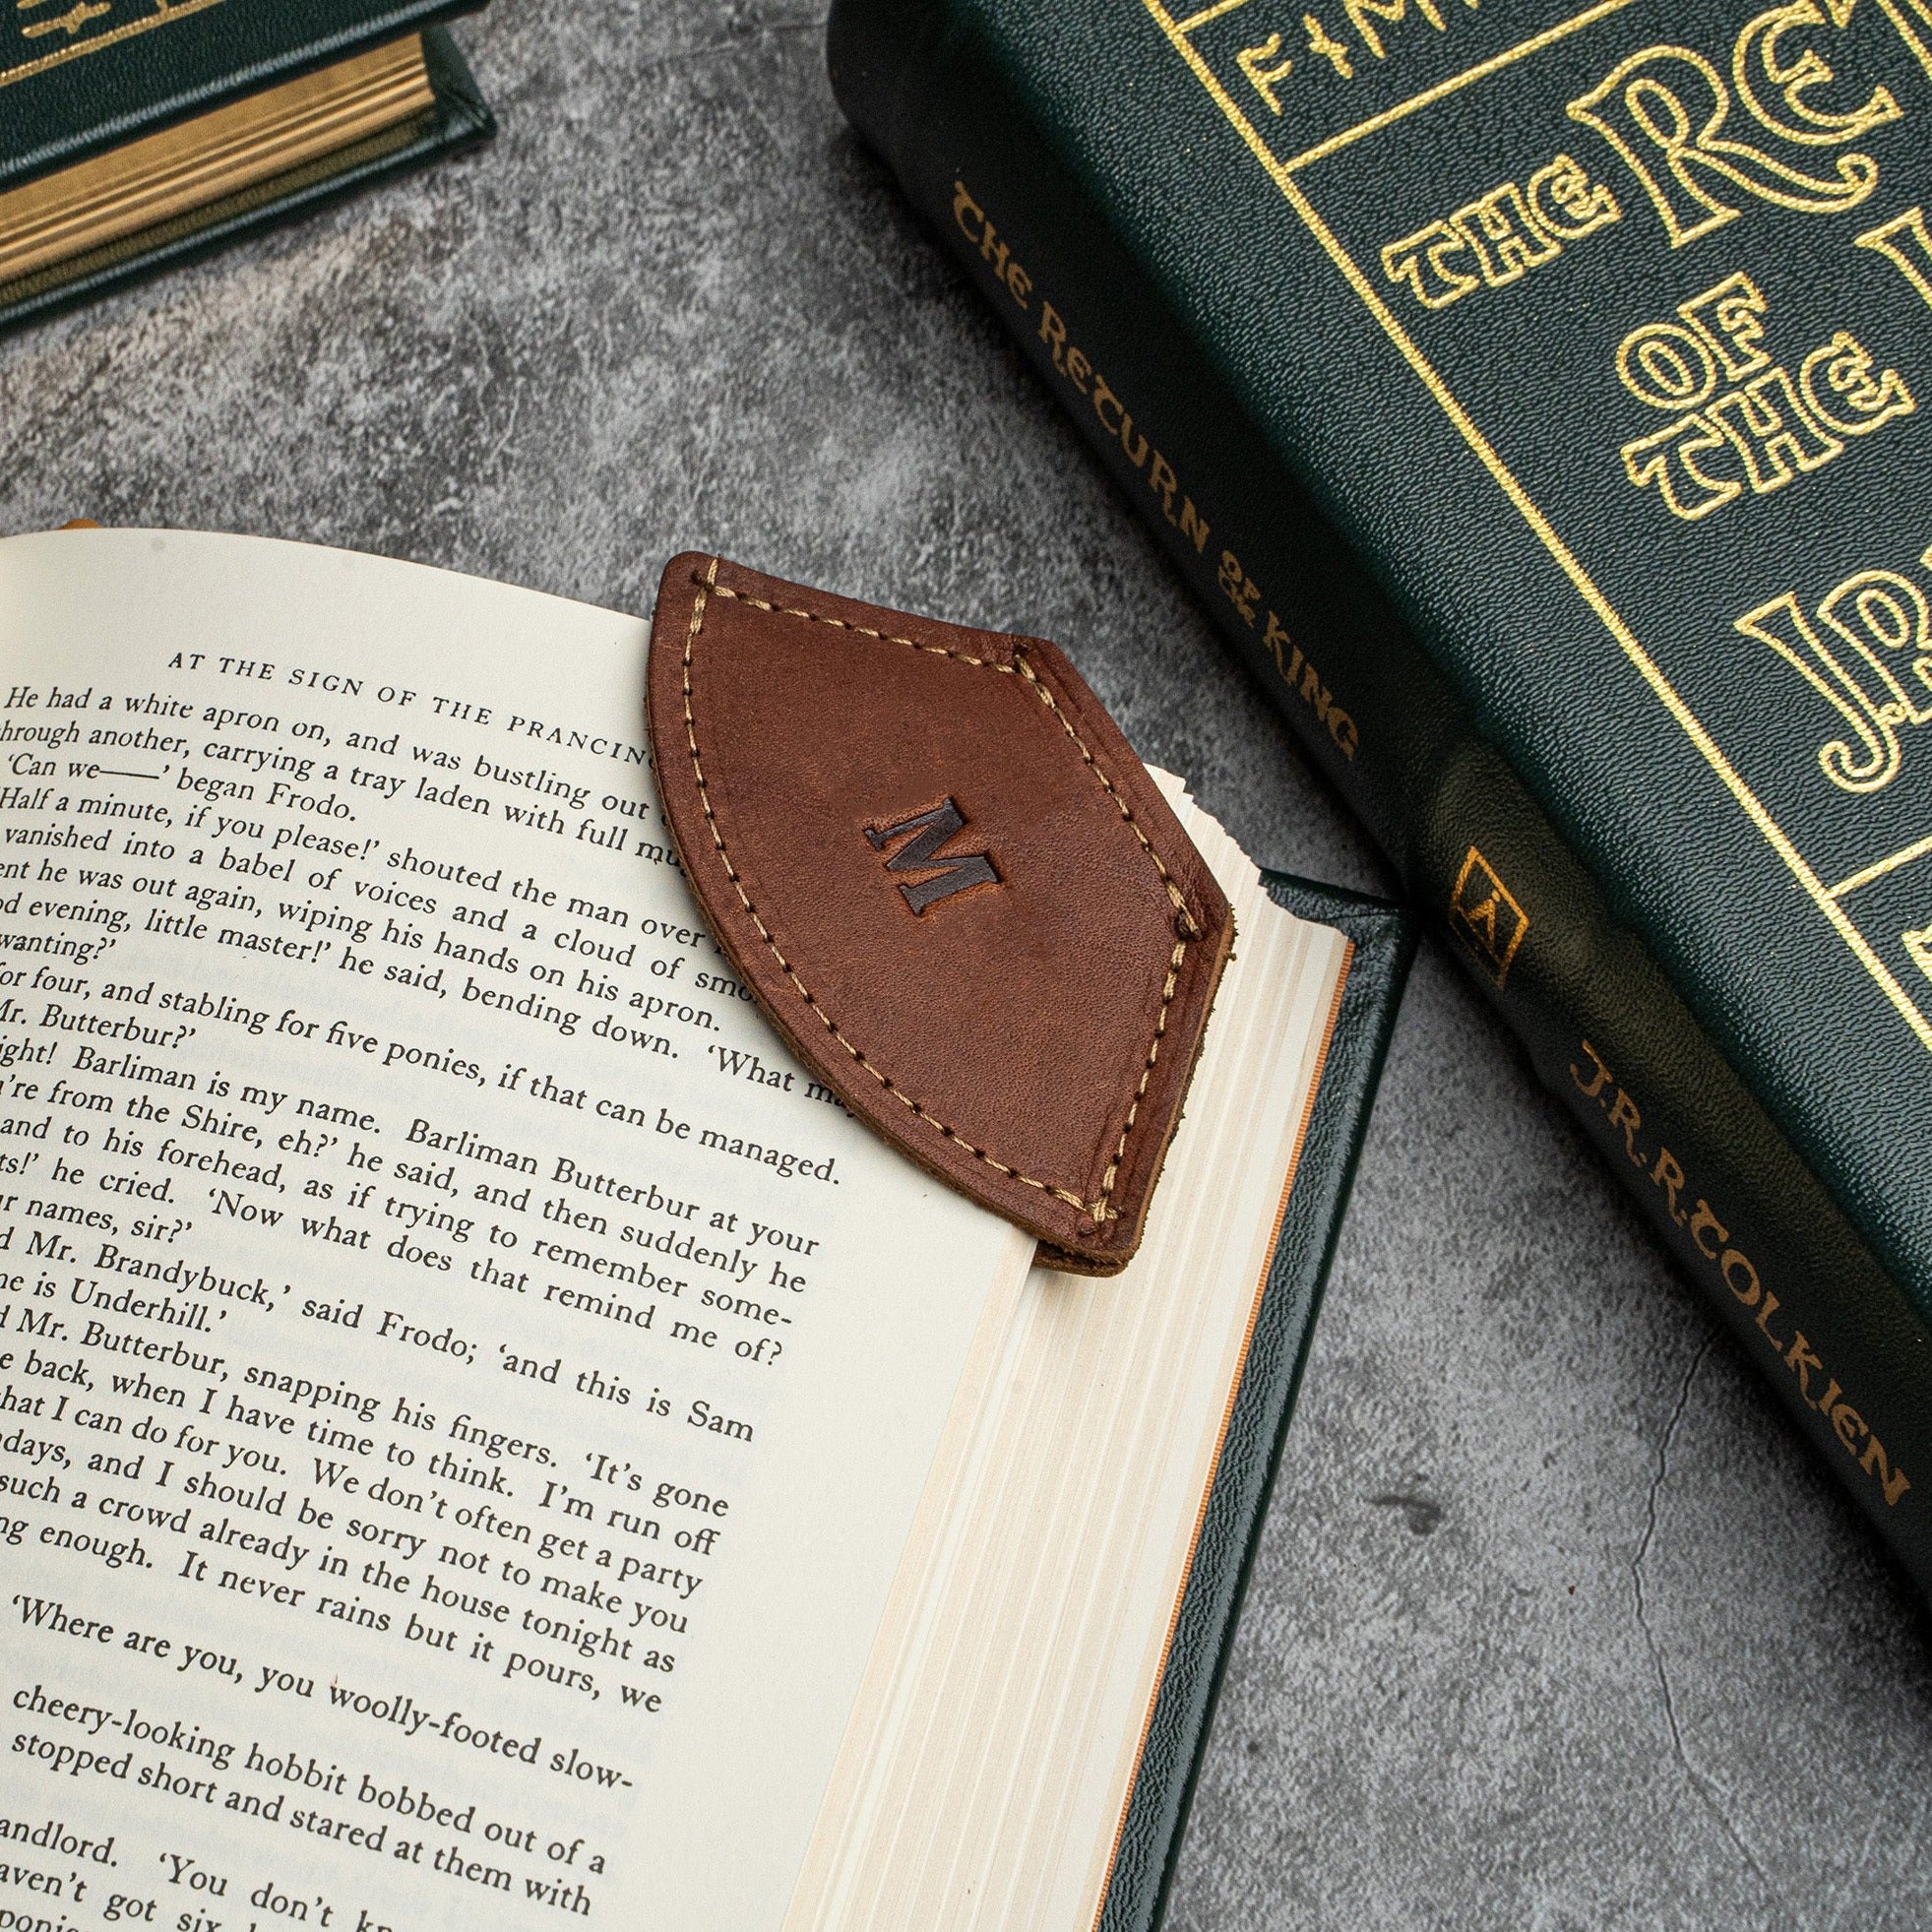 Engrave Leather with Cricut: Custom Bookmarks! - Jennifer Maker